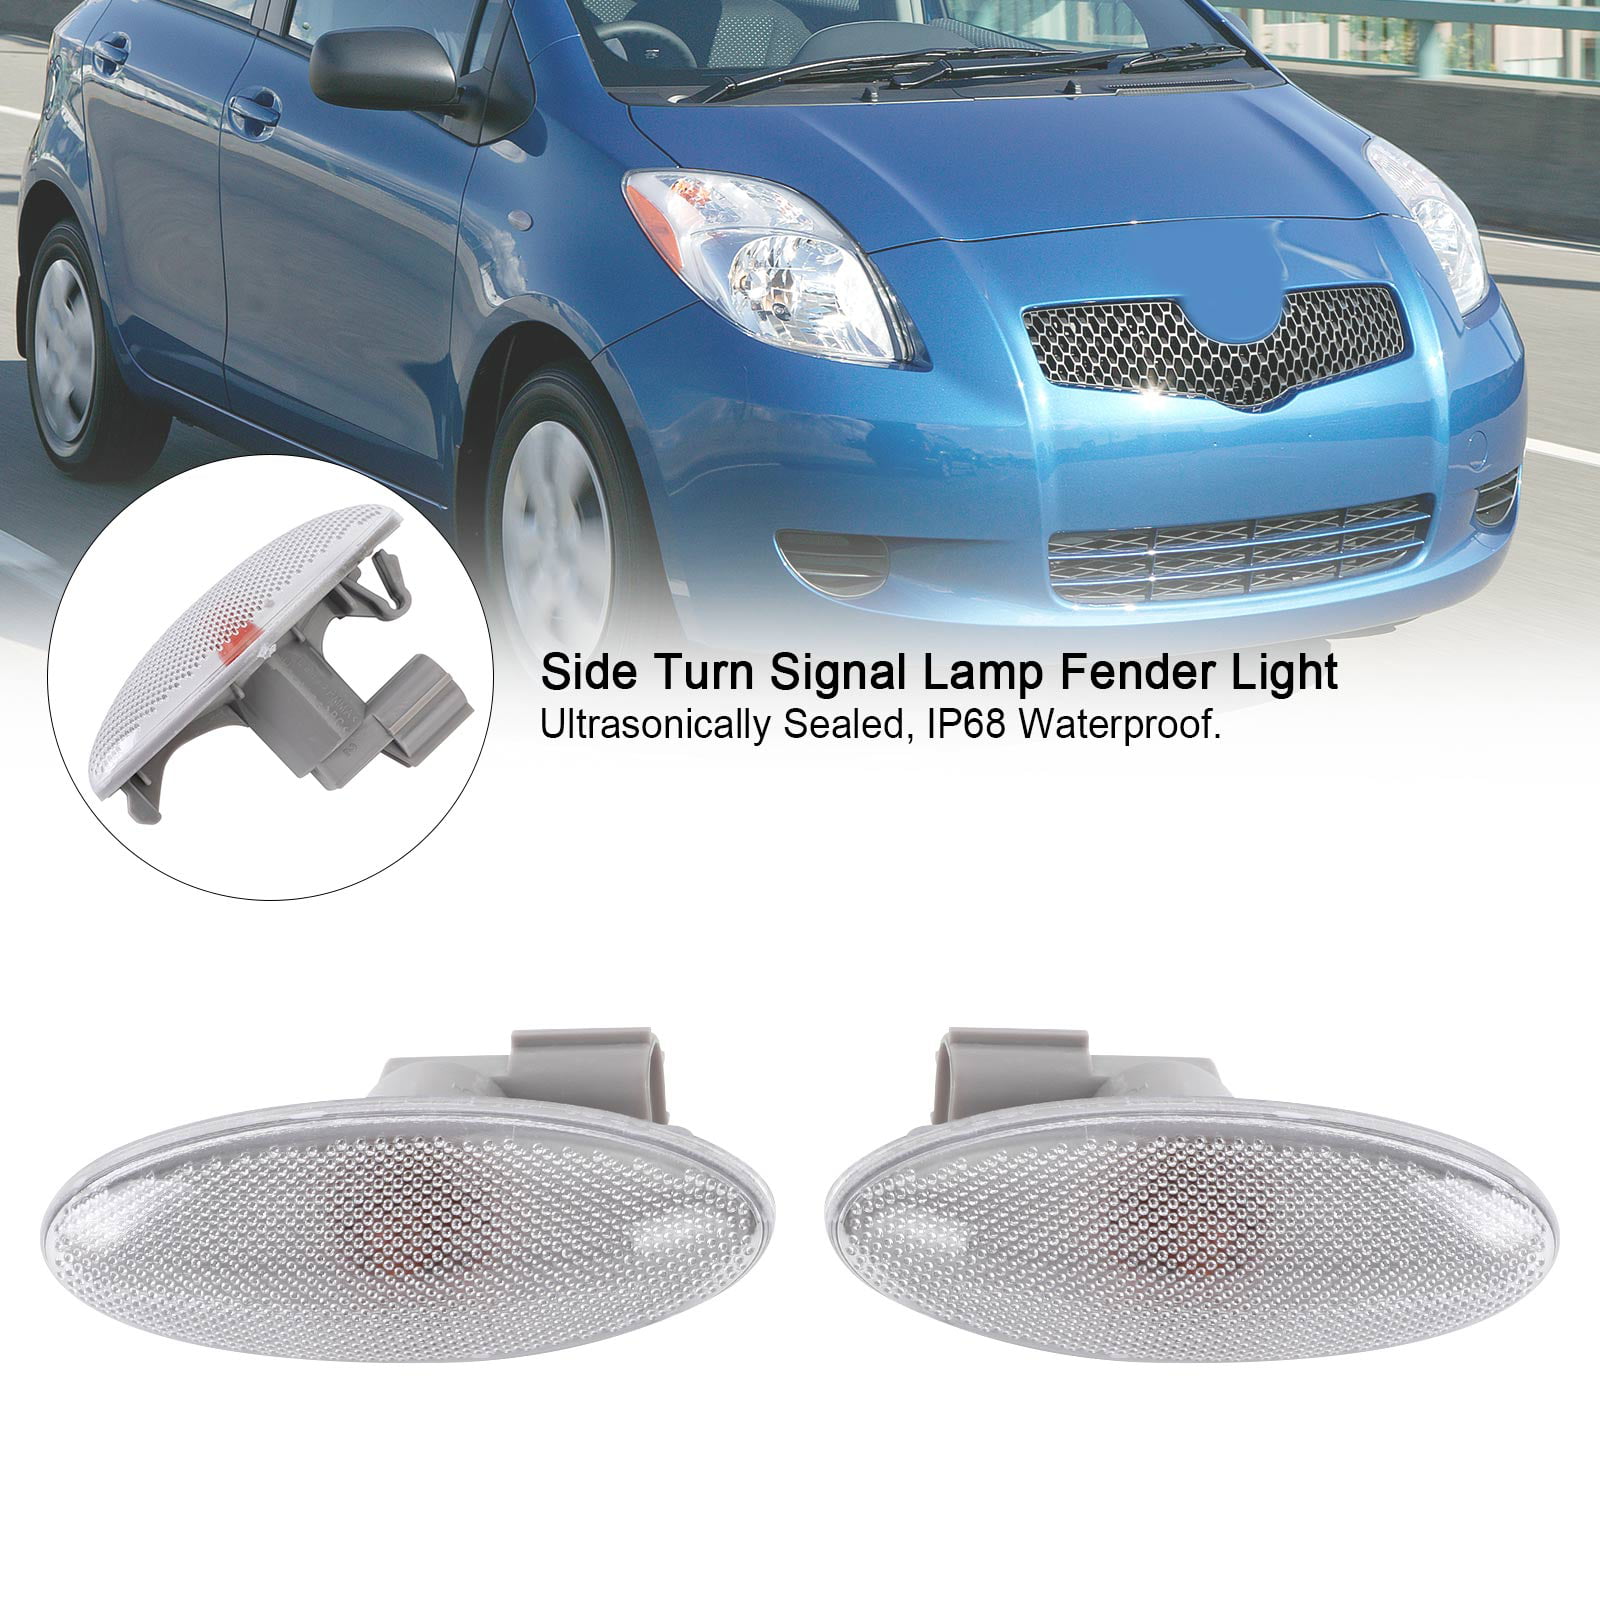 Areyourshop Side Turn Signal Lamp Fender Light for Toyota Corolla